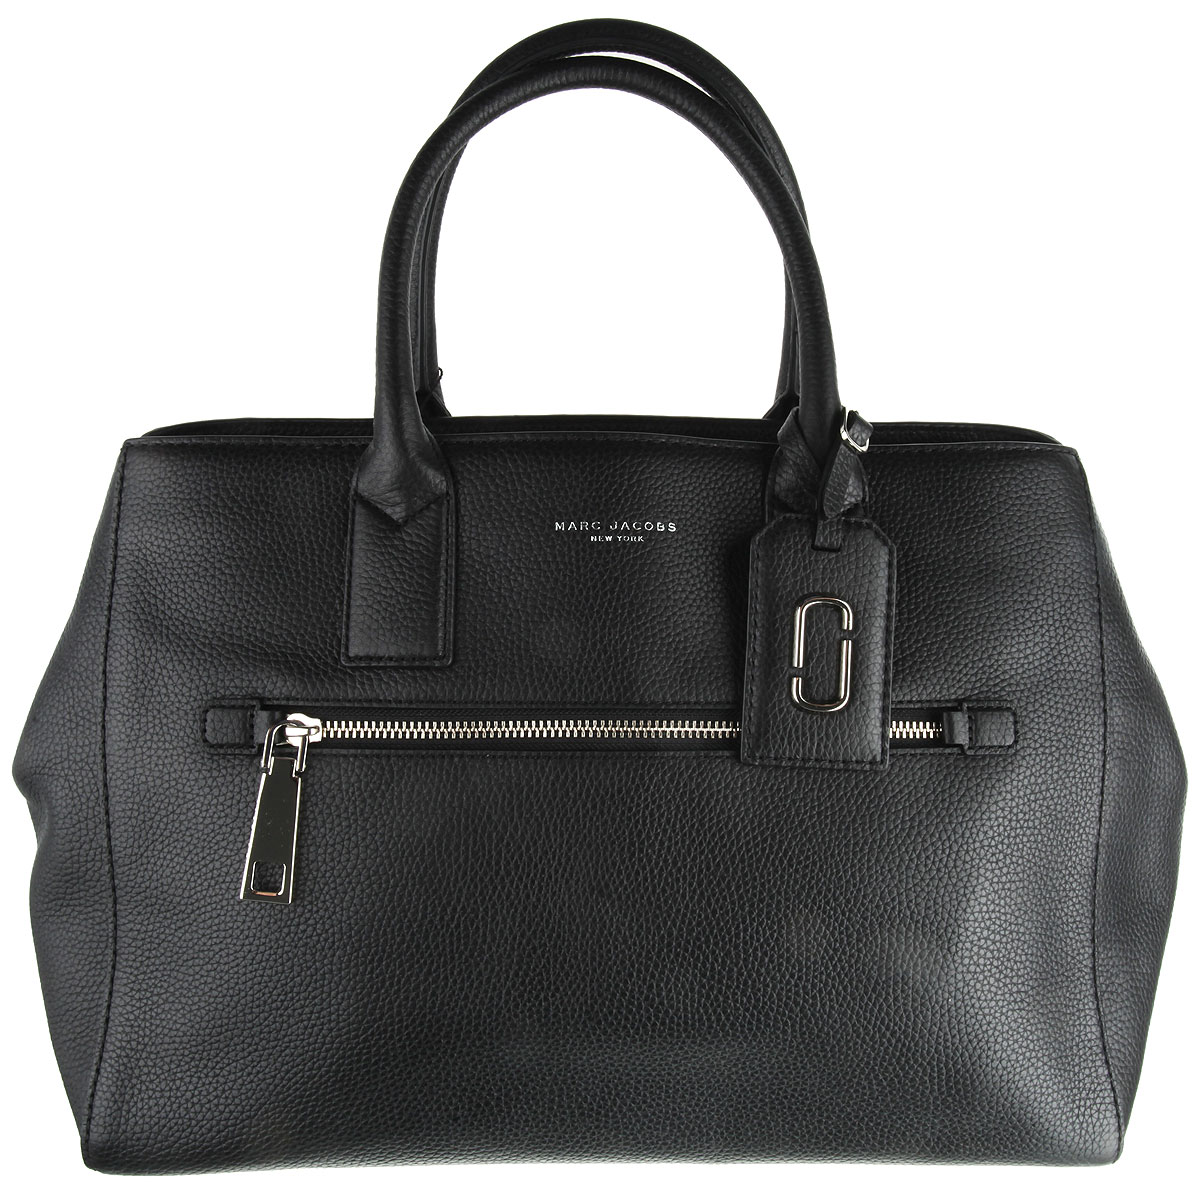 Handbags Marc Jacobs, Style code: m0008276-001-